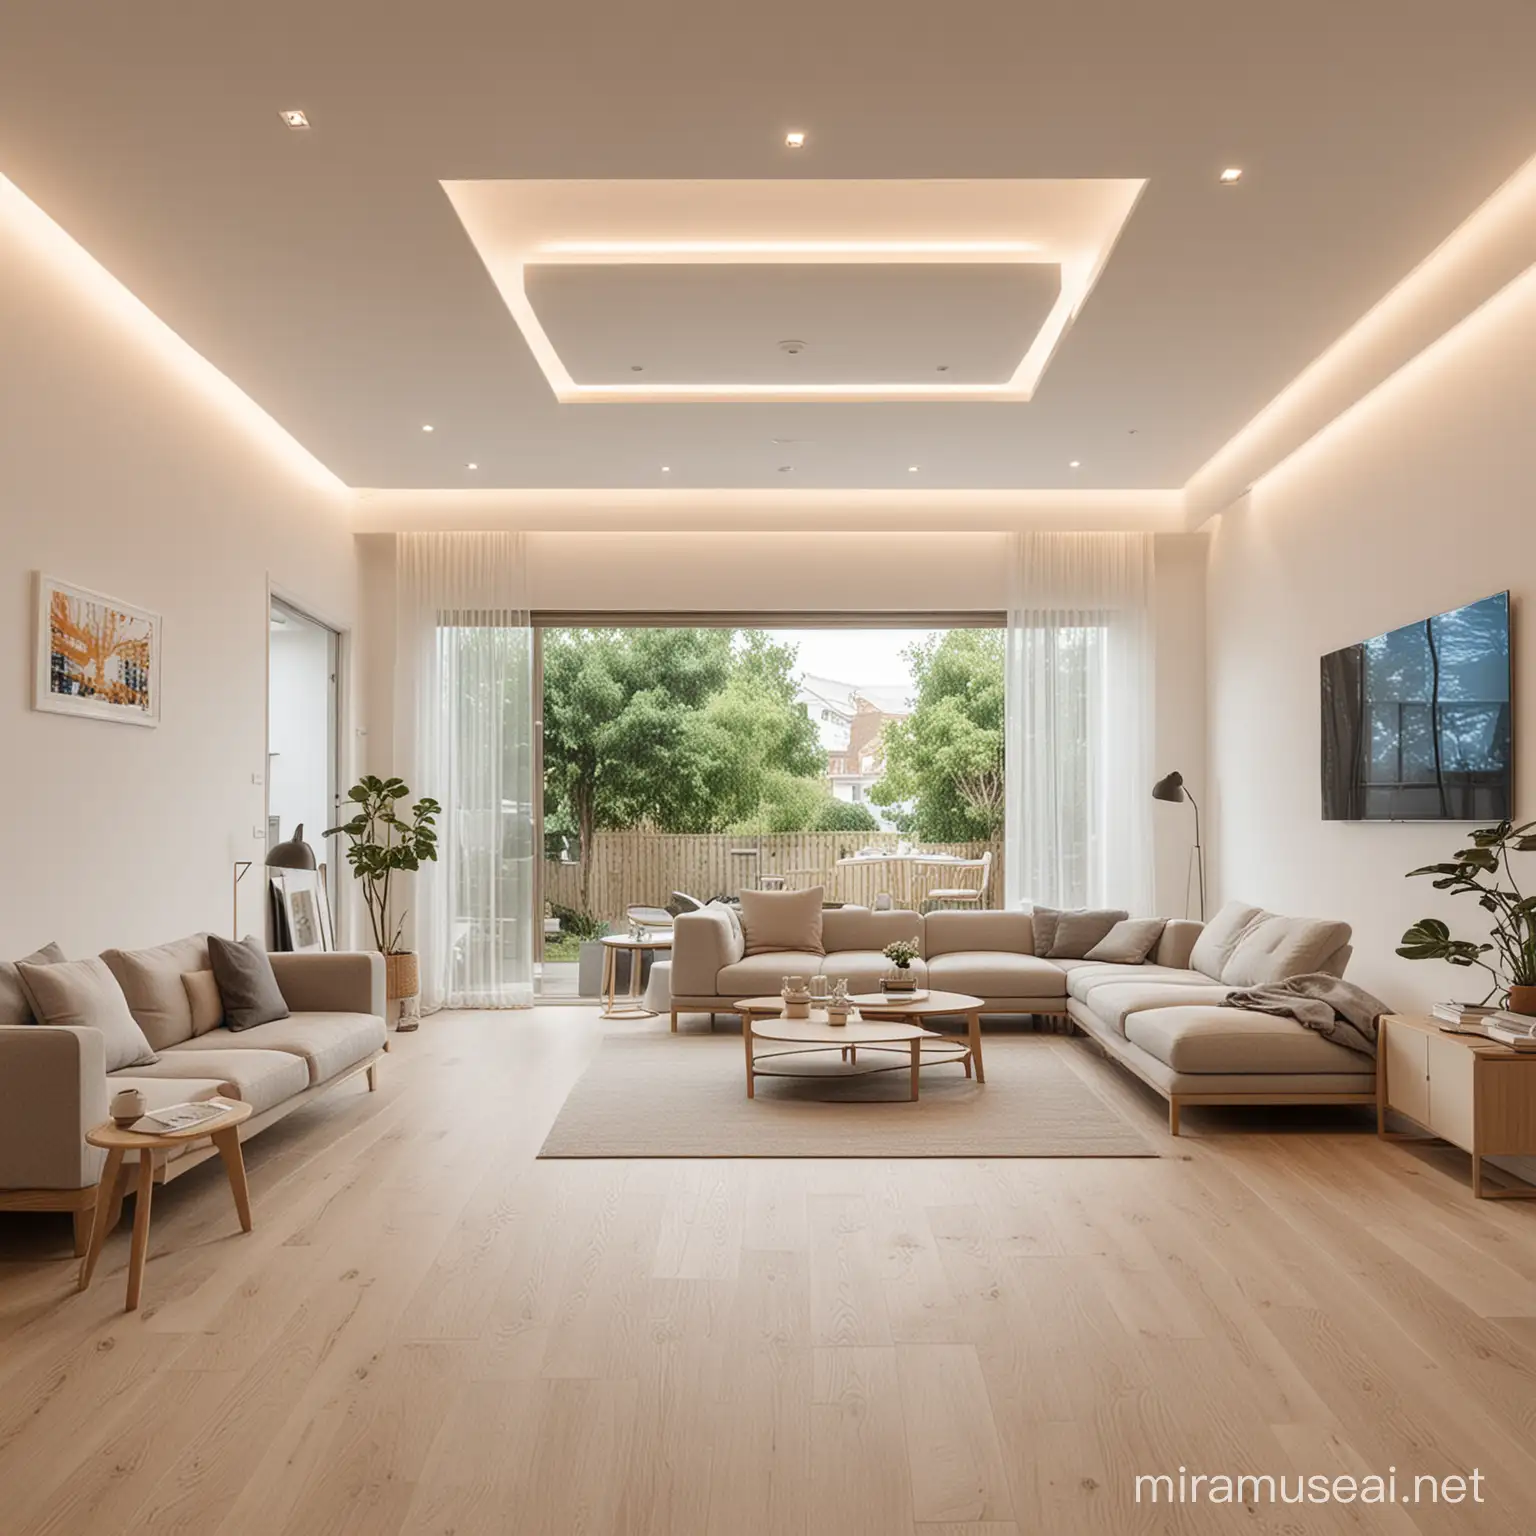 Modern Smart Home Interior with Soft Lighting